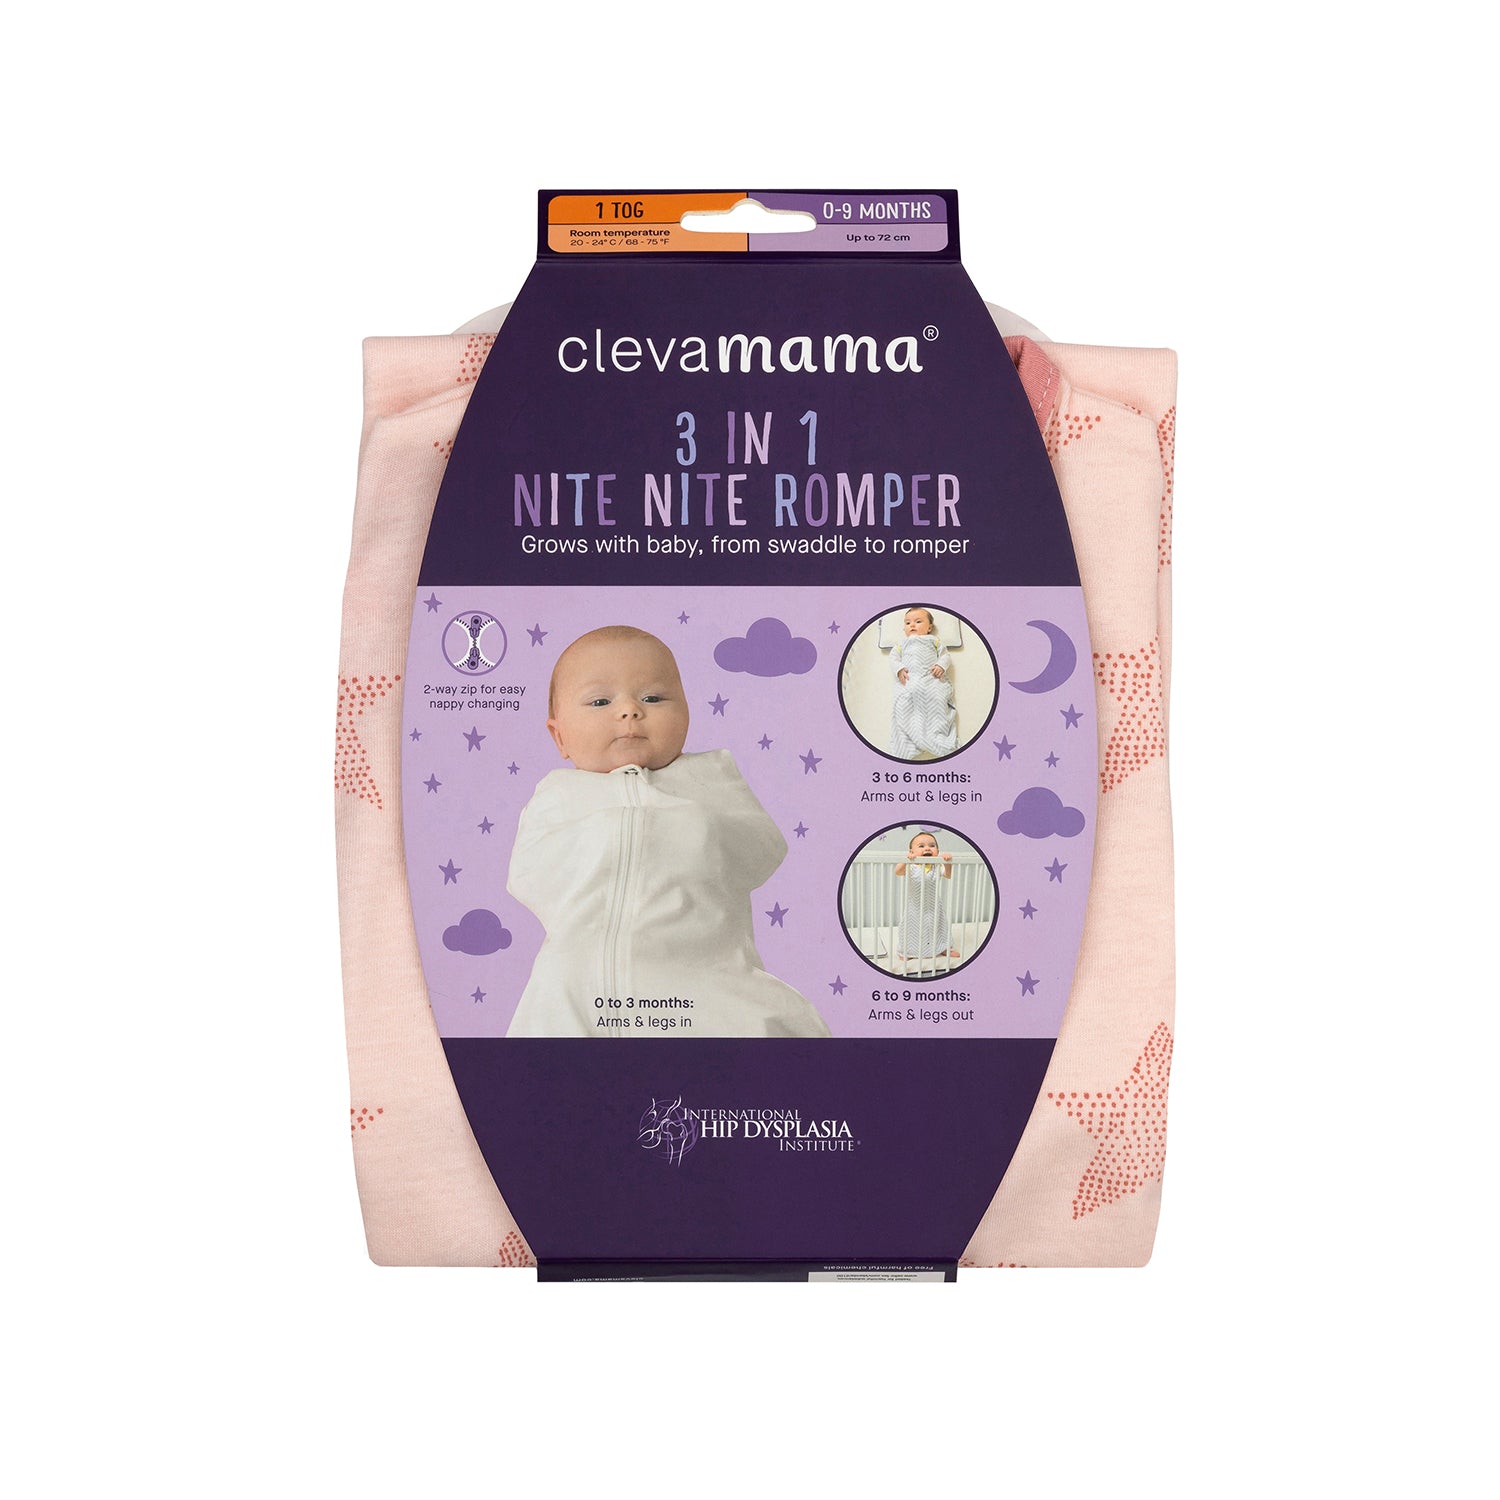 Clevamama - 3-in-1 Nite Nite Romper 1 Tog (Pink)